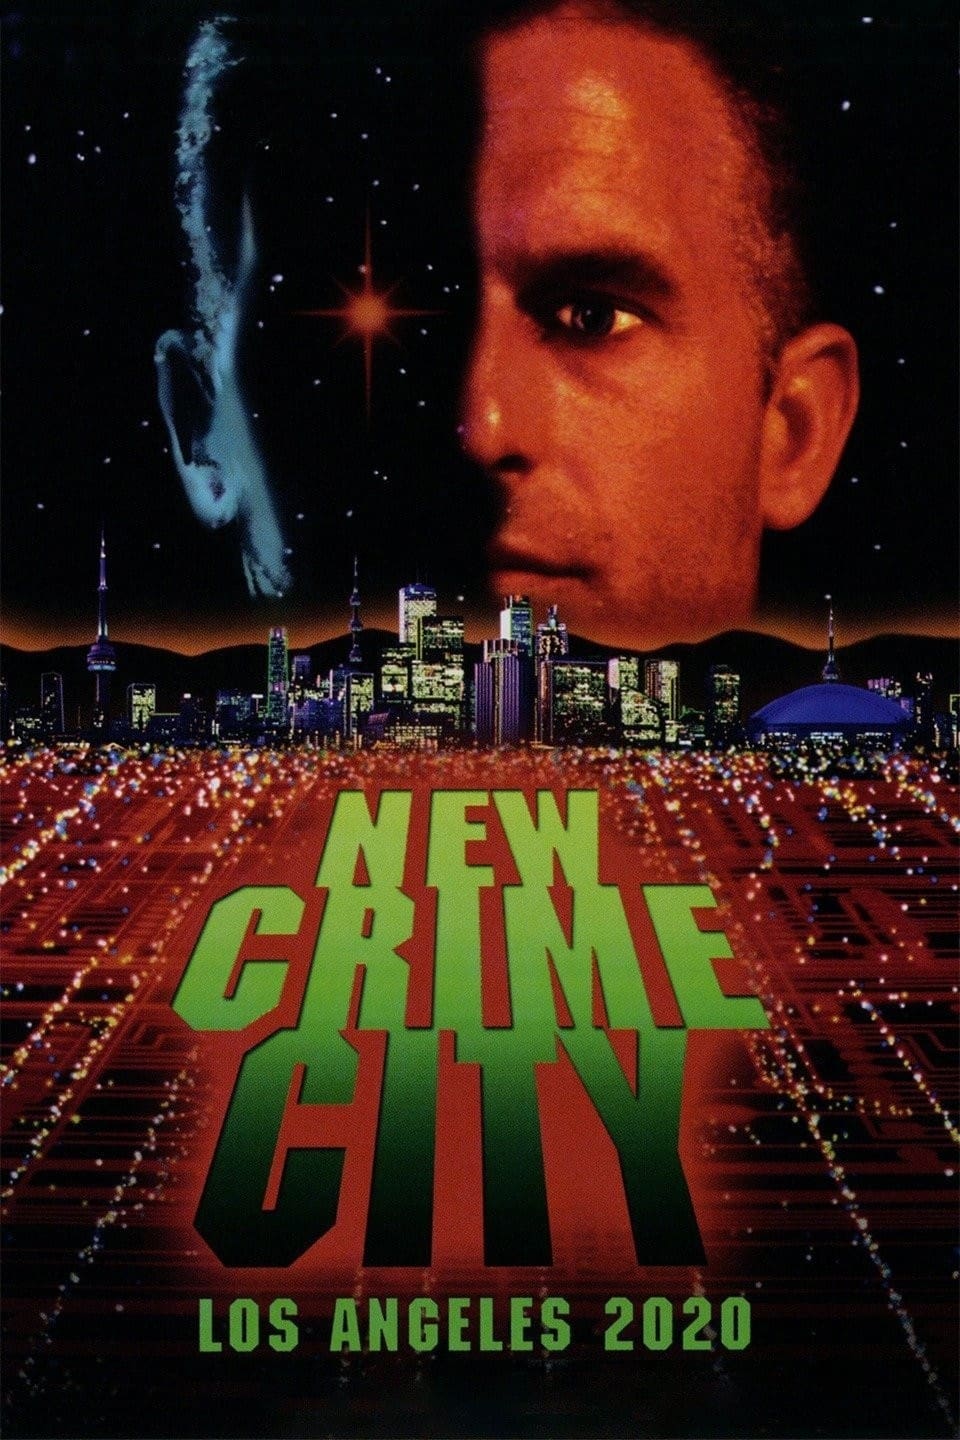 New Crime City: Los Angeles 2020